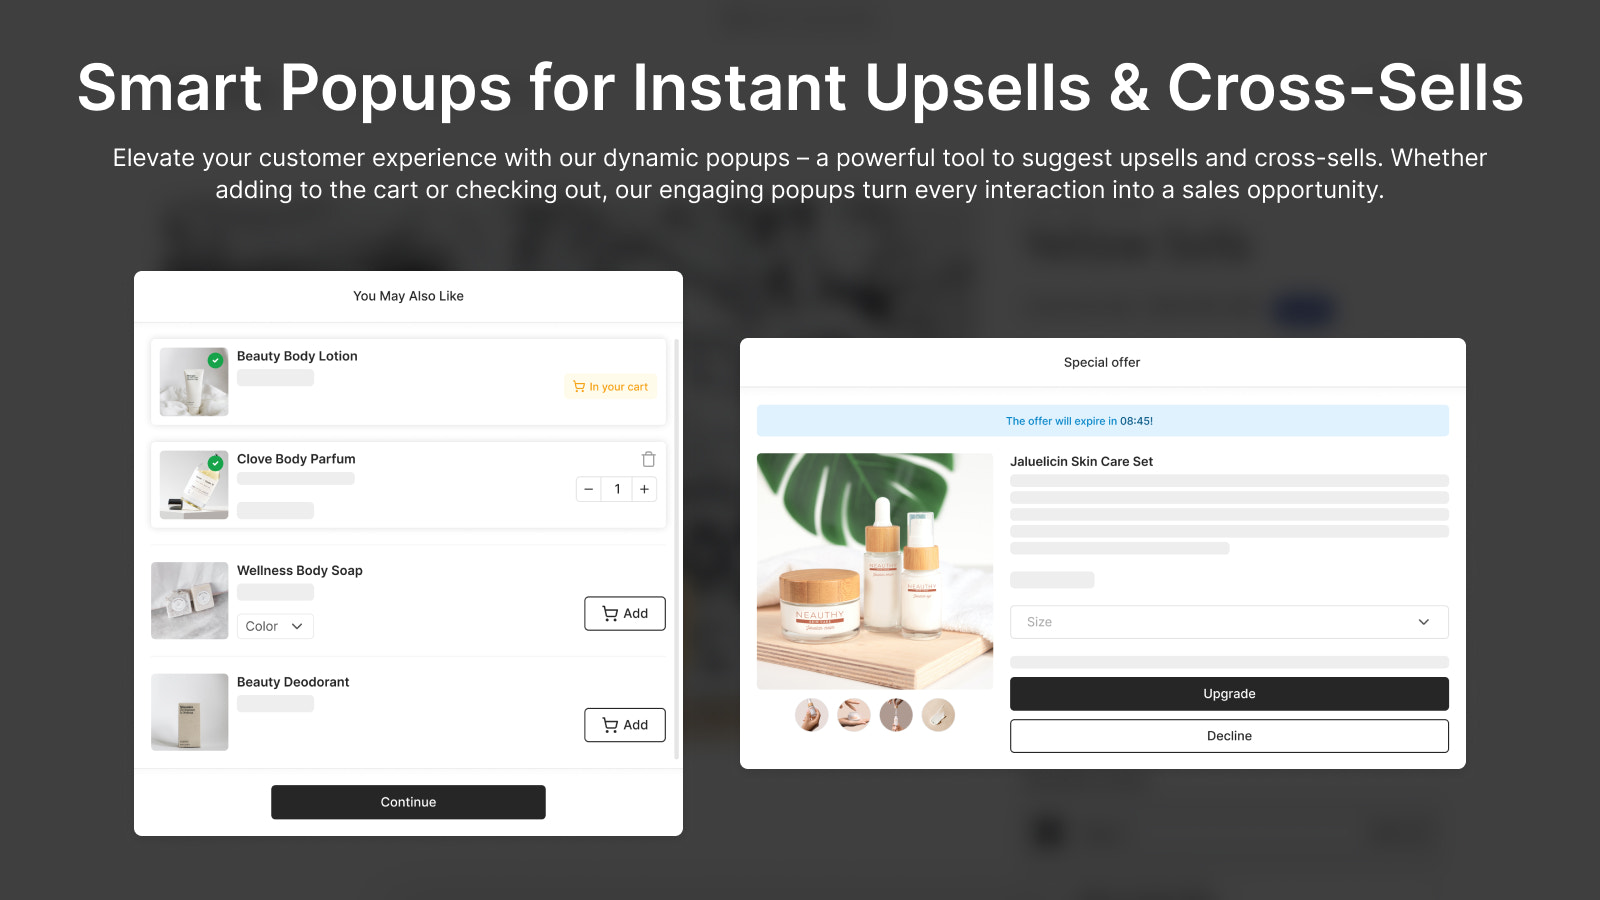 Smart Popups for Instant Upsells & Cross-Sells